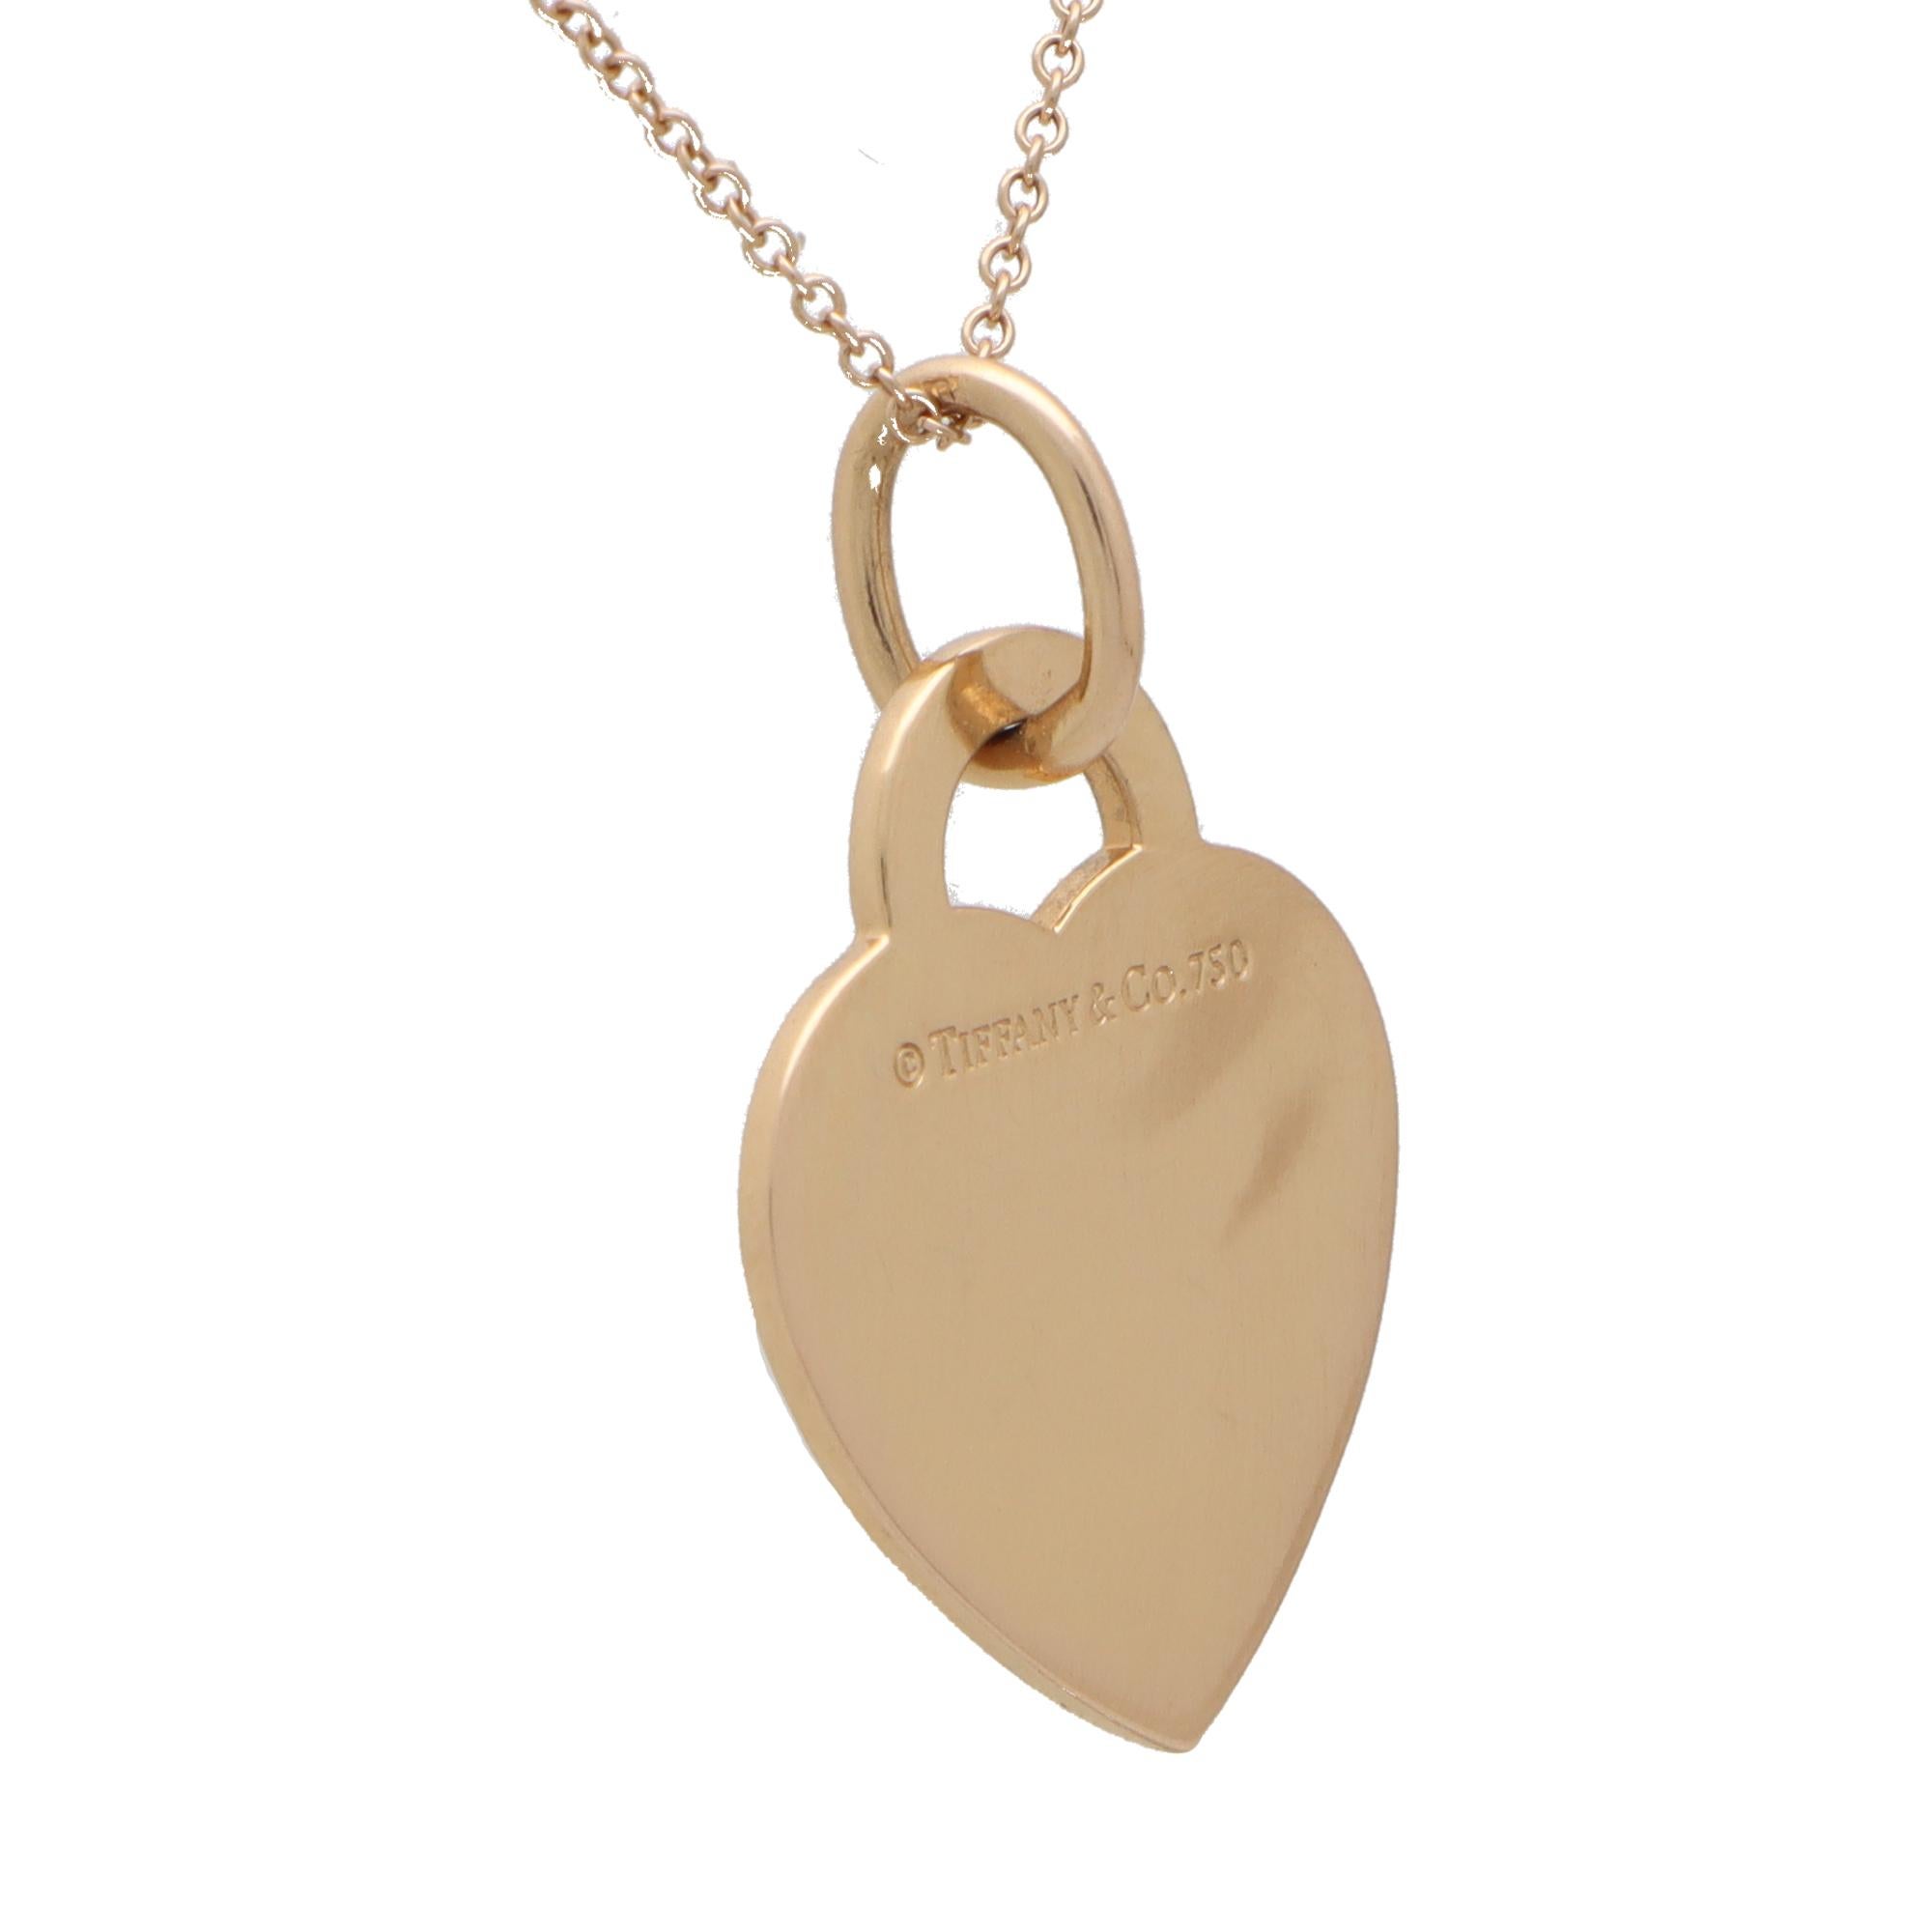 tiffany heart necklace gold